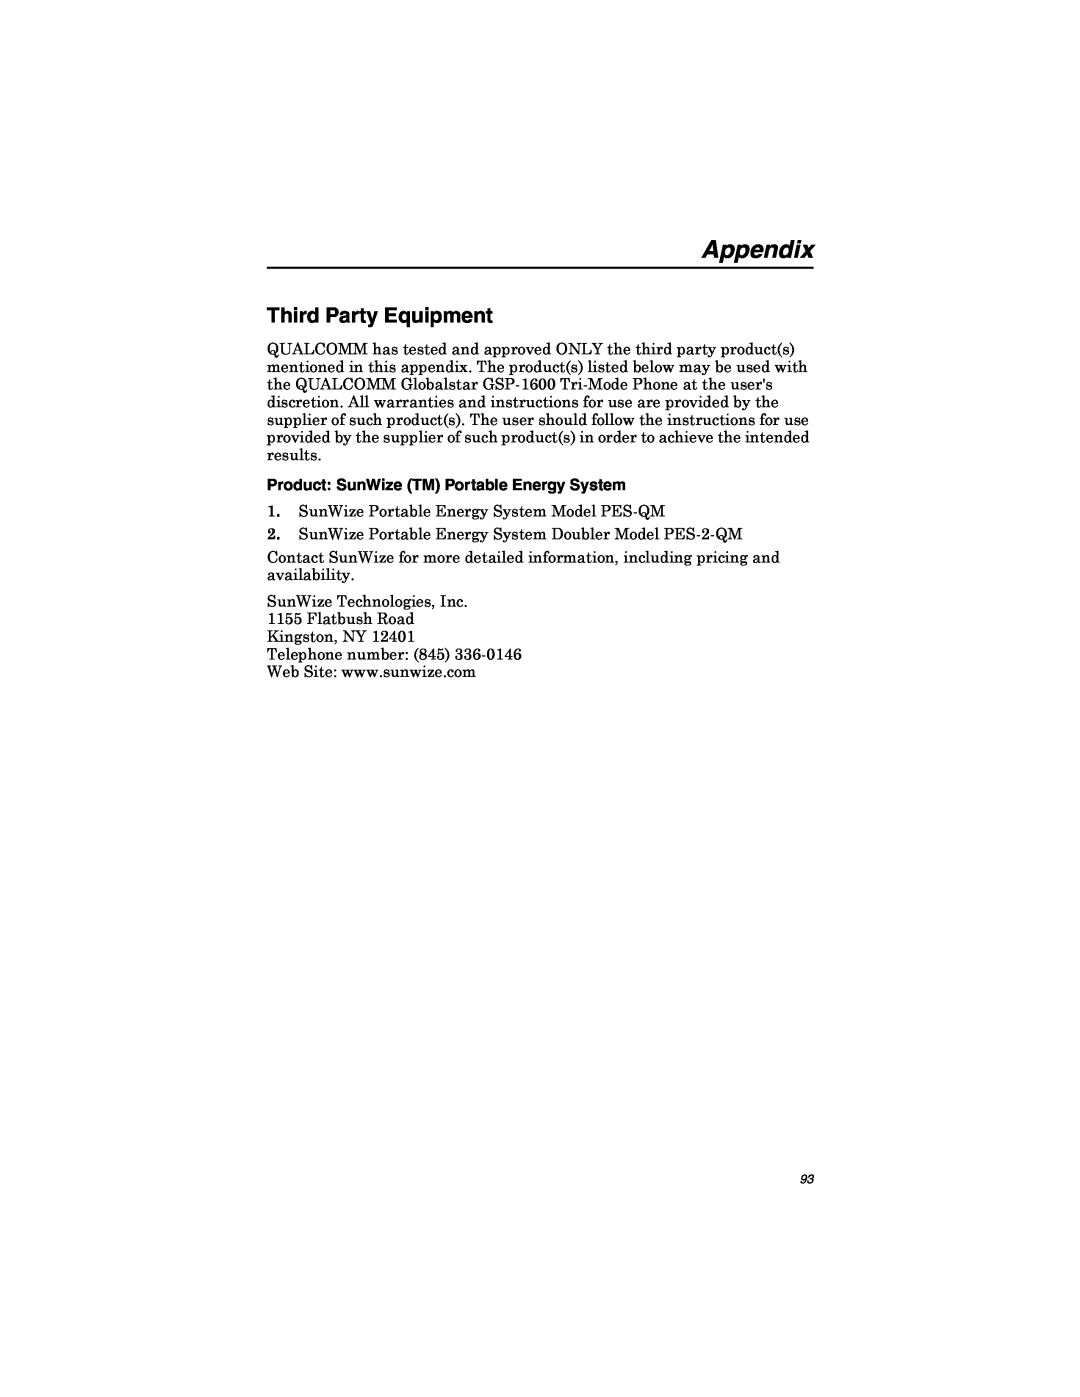 Qualcomm GSP-1600 manual Appendix, Third Party Equipment, Uhvxowv, Product SunWize TM Portable Energy System 